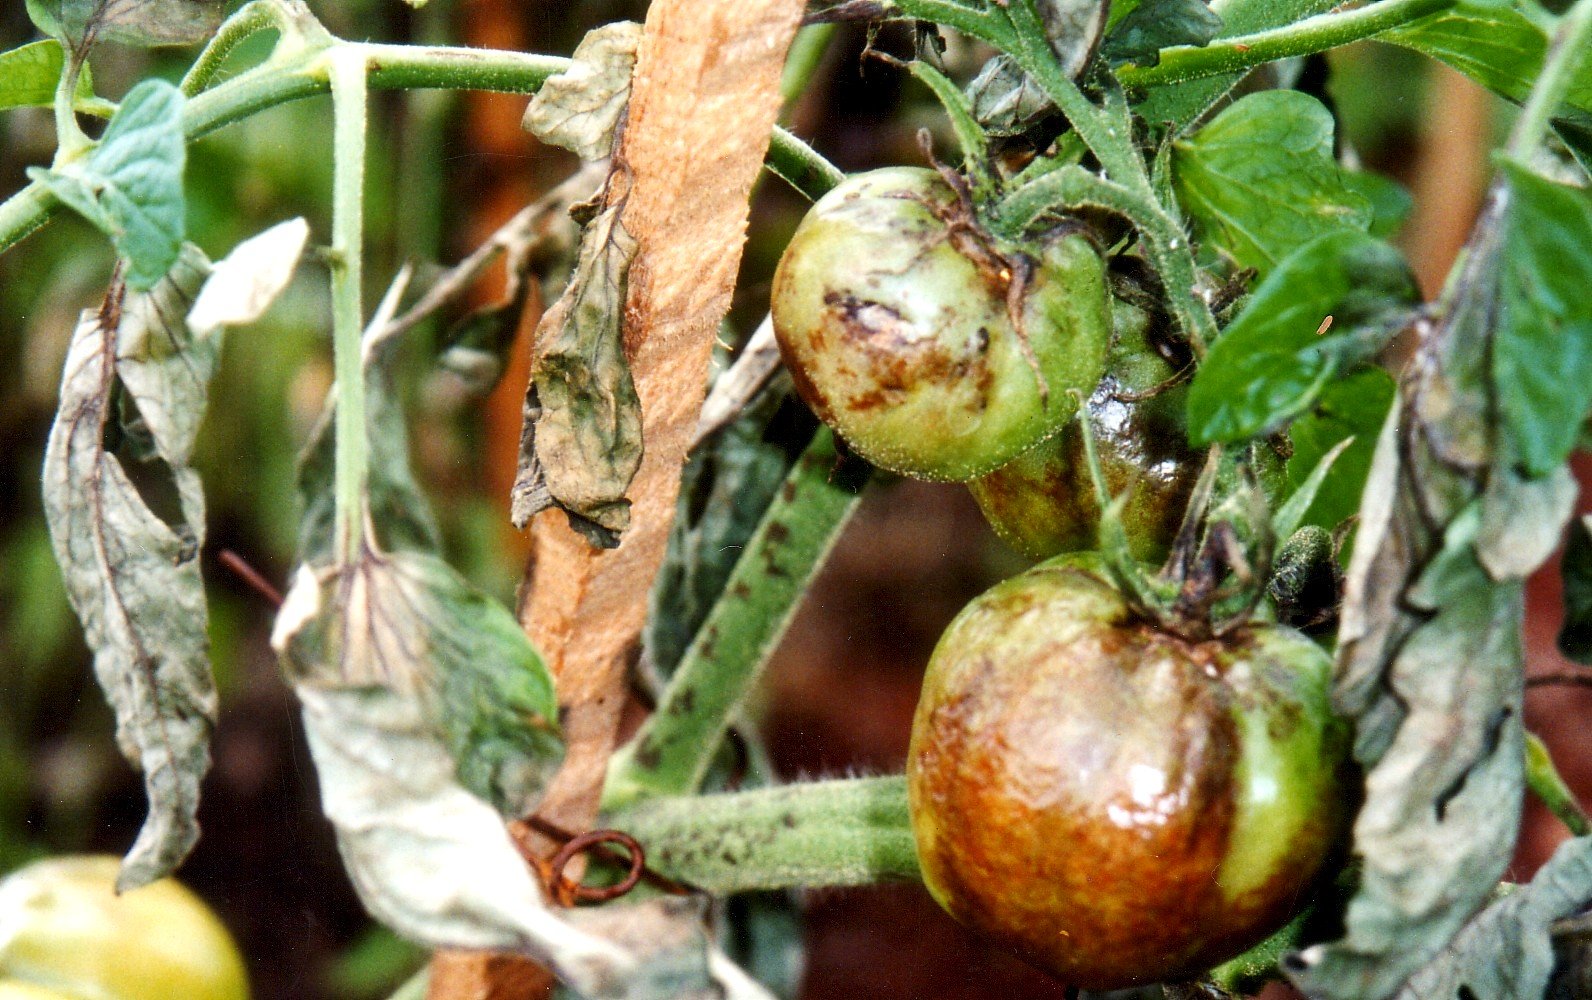 blight on tomatoes treatment organic